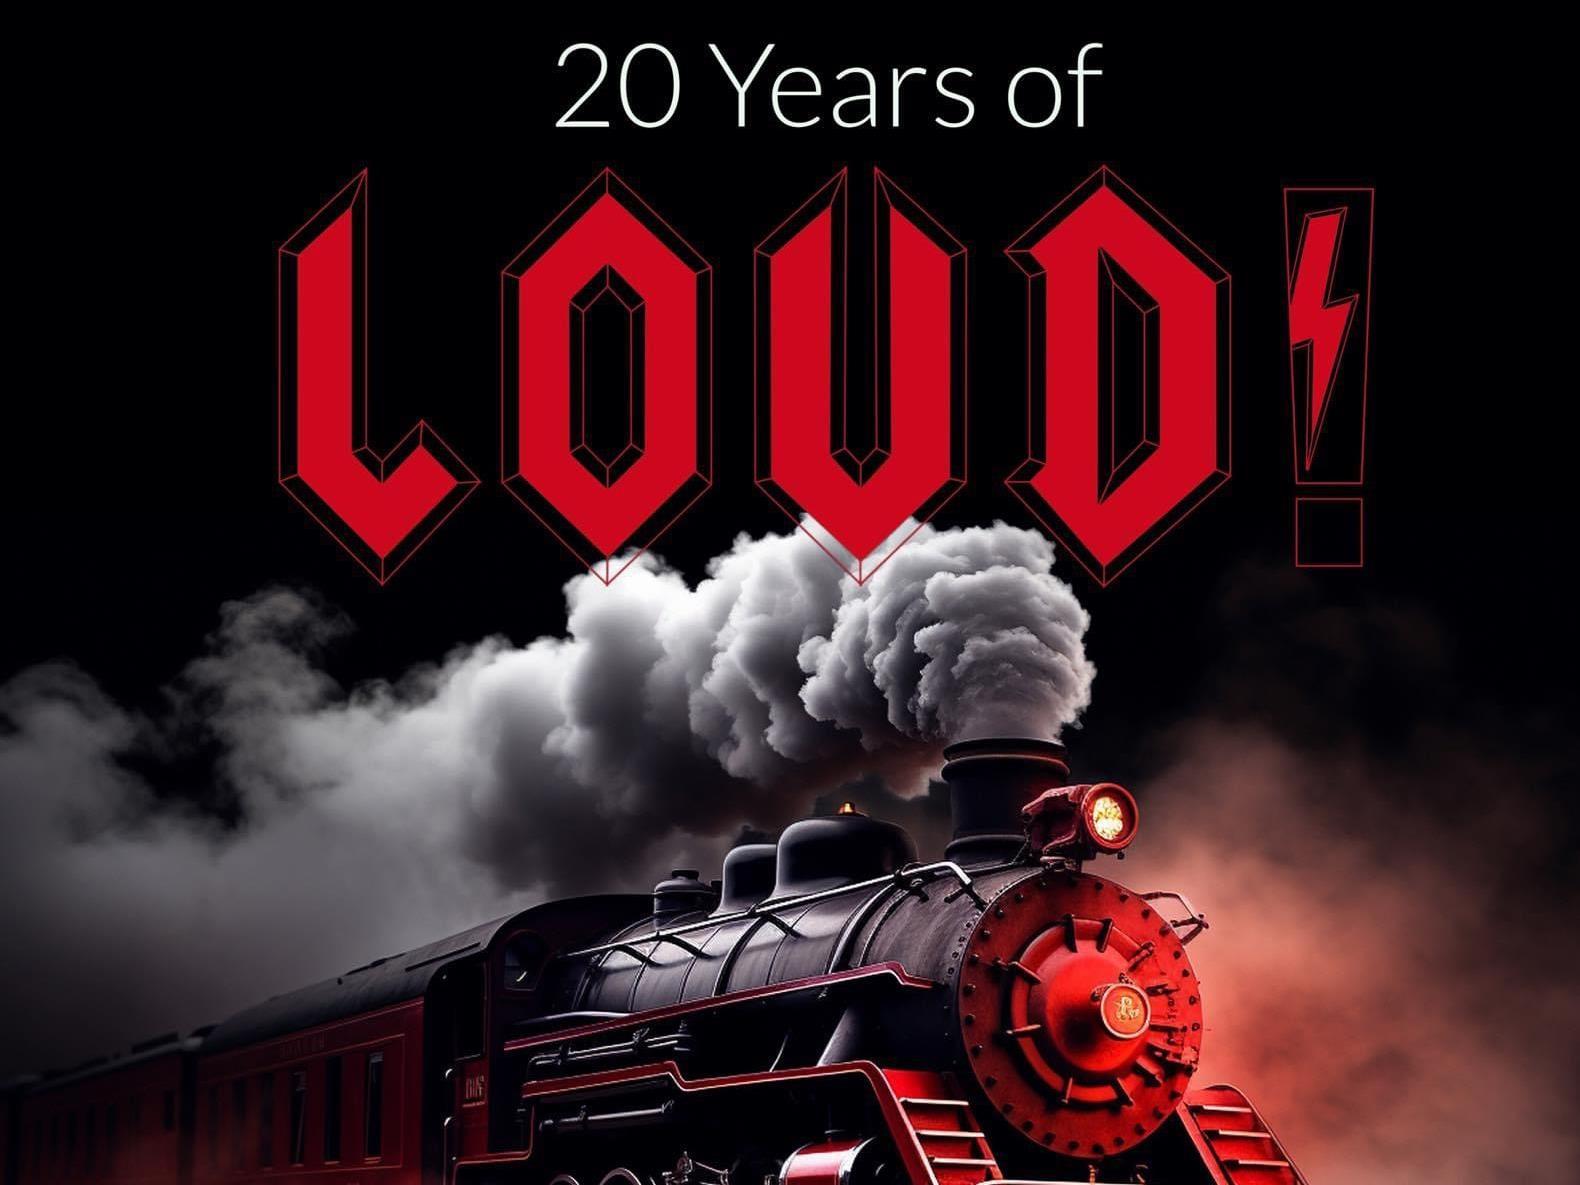 Concert - "20 Years of LOUD!"